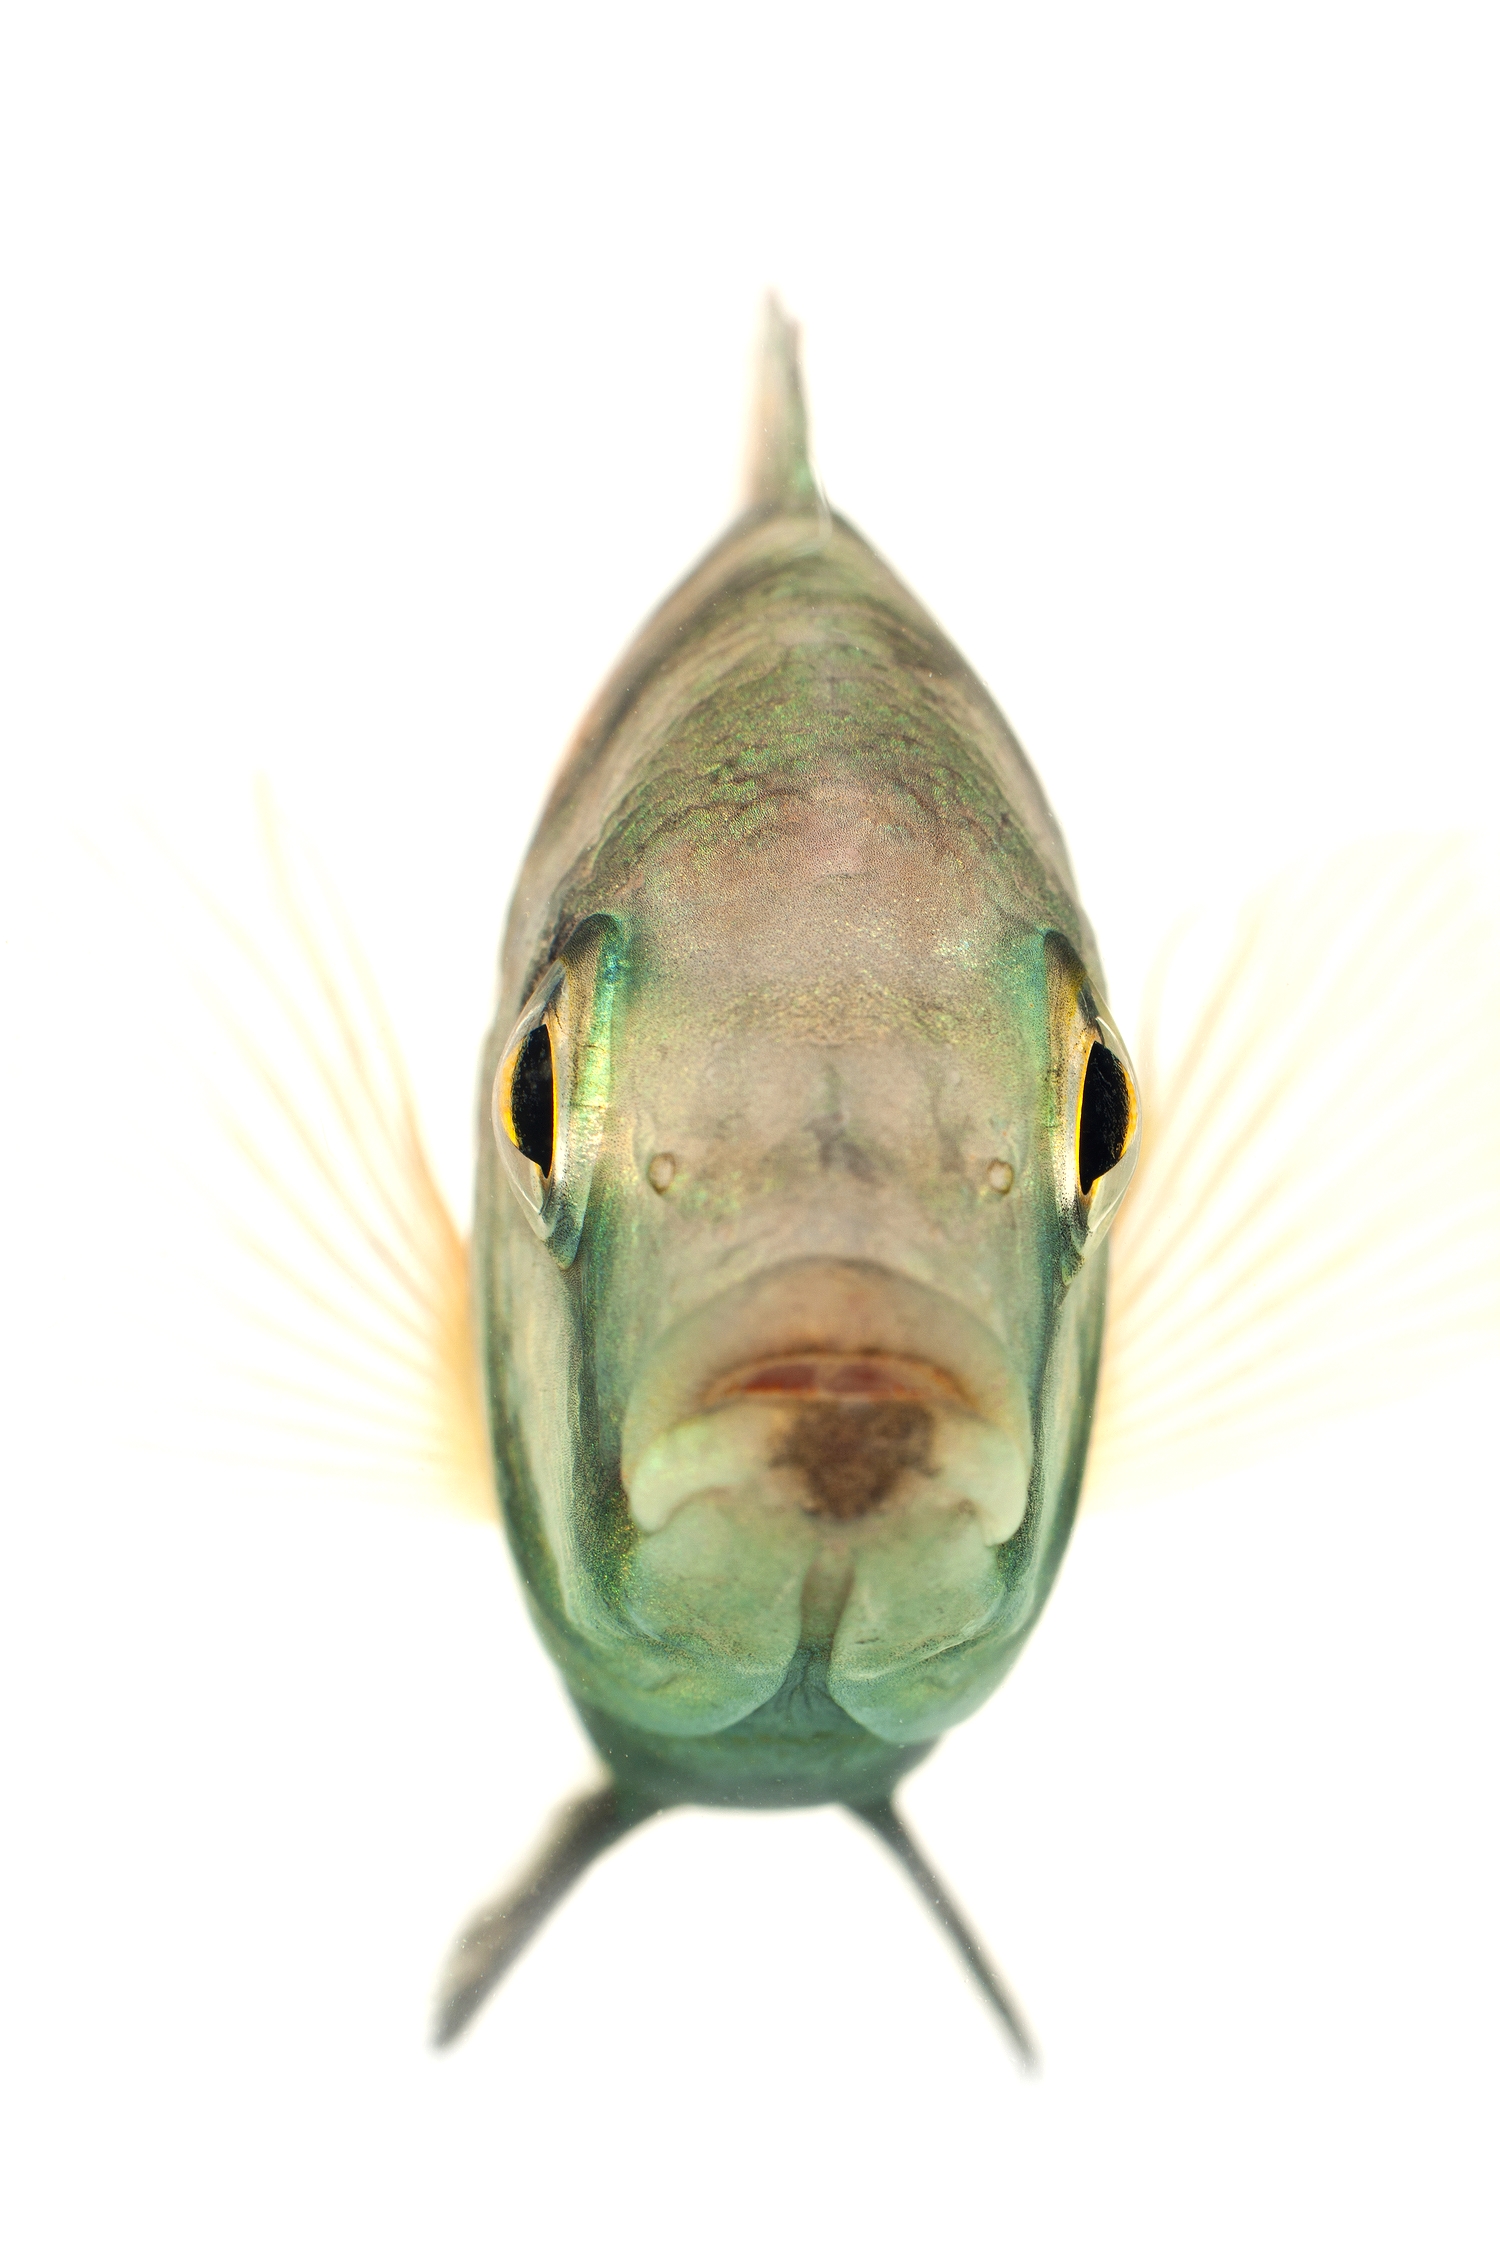 African Cichlid - Malawi Haplochromis